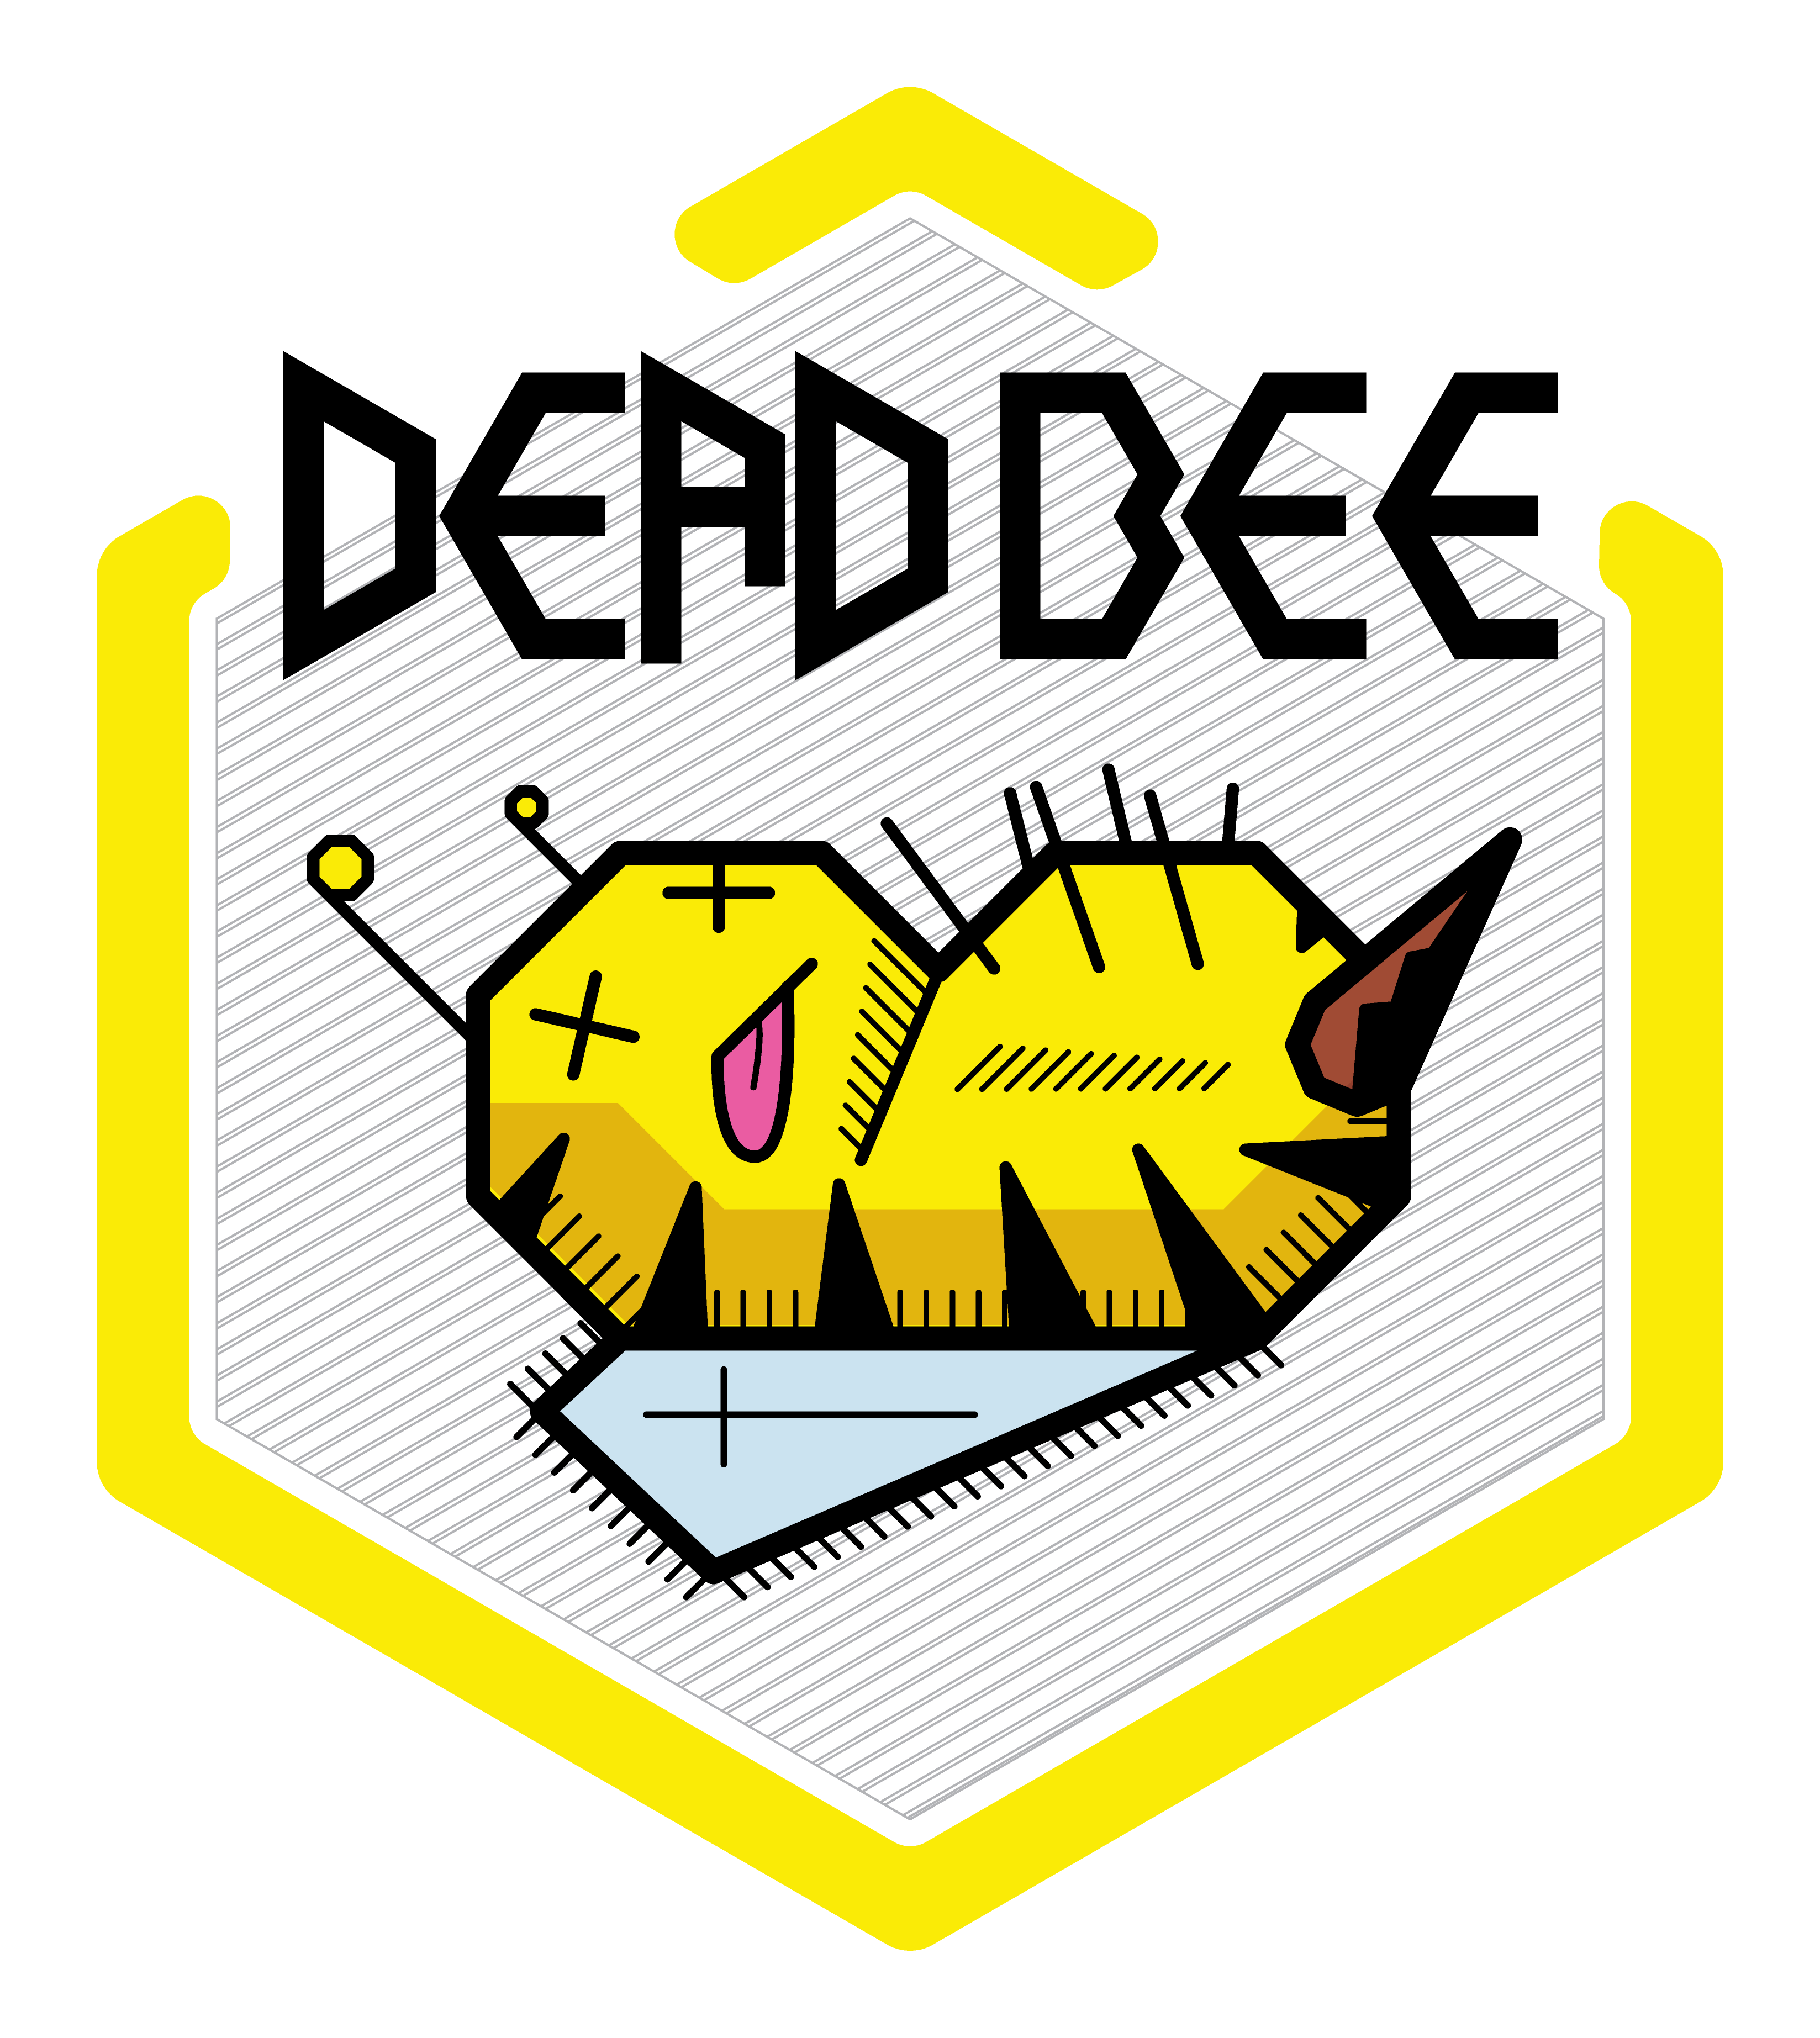 Logo design for shirt design company 'DeadBee Designs'.